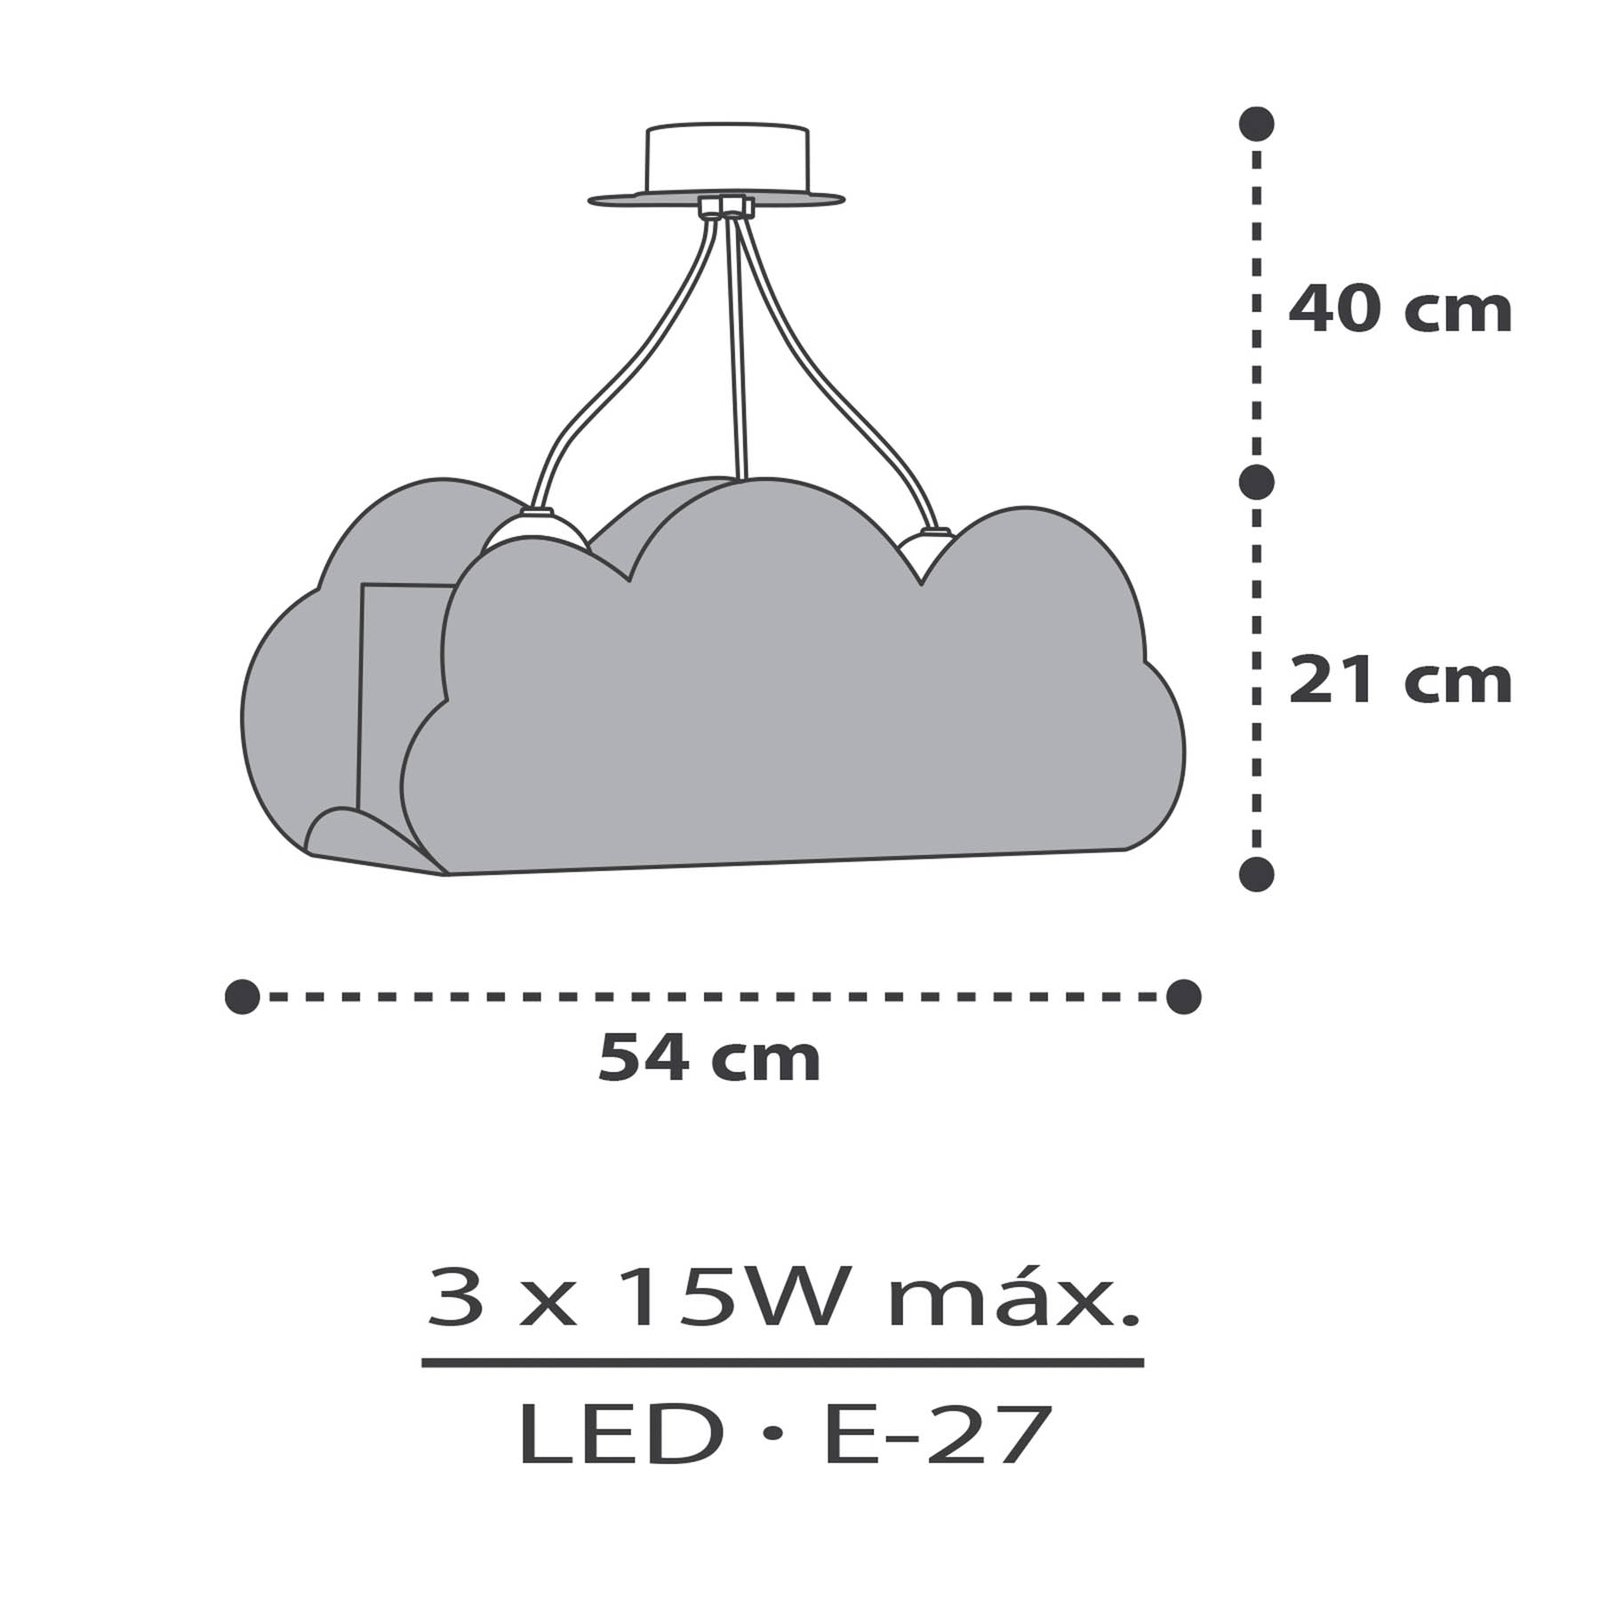 Dalber Cloud Grey pendant light in the shape of a cloud, grey